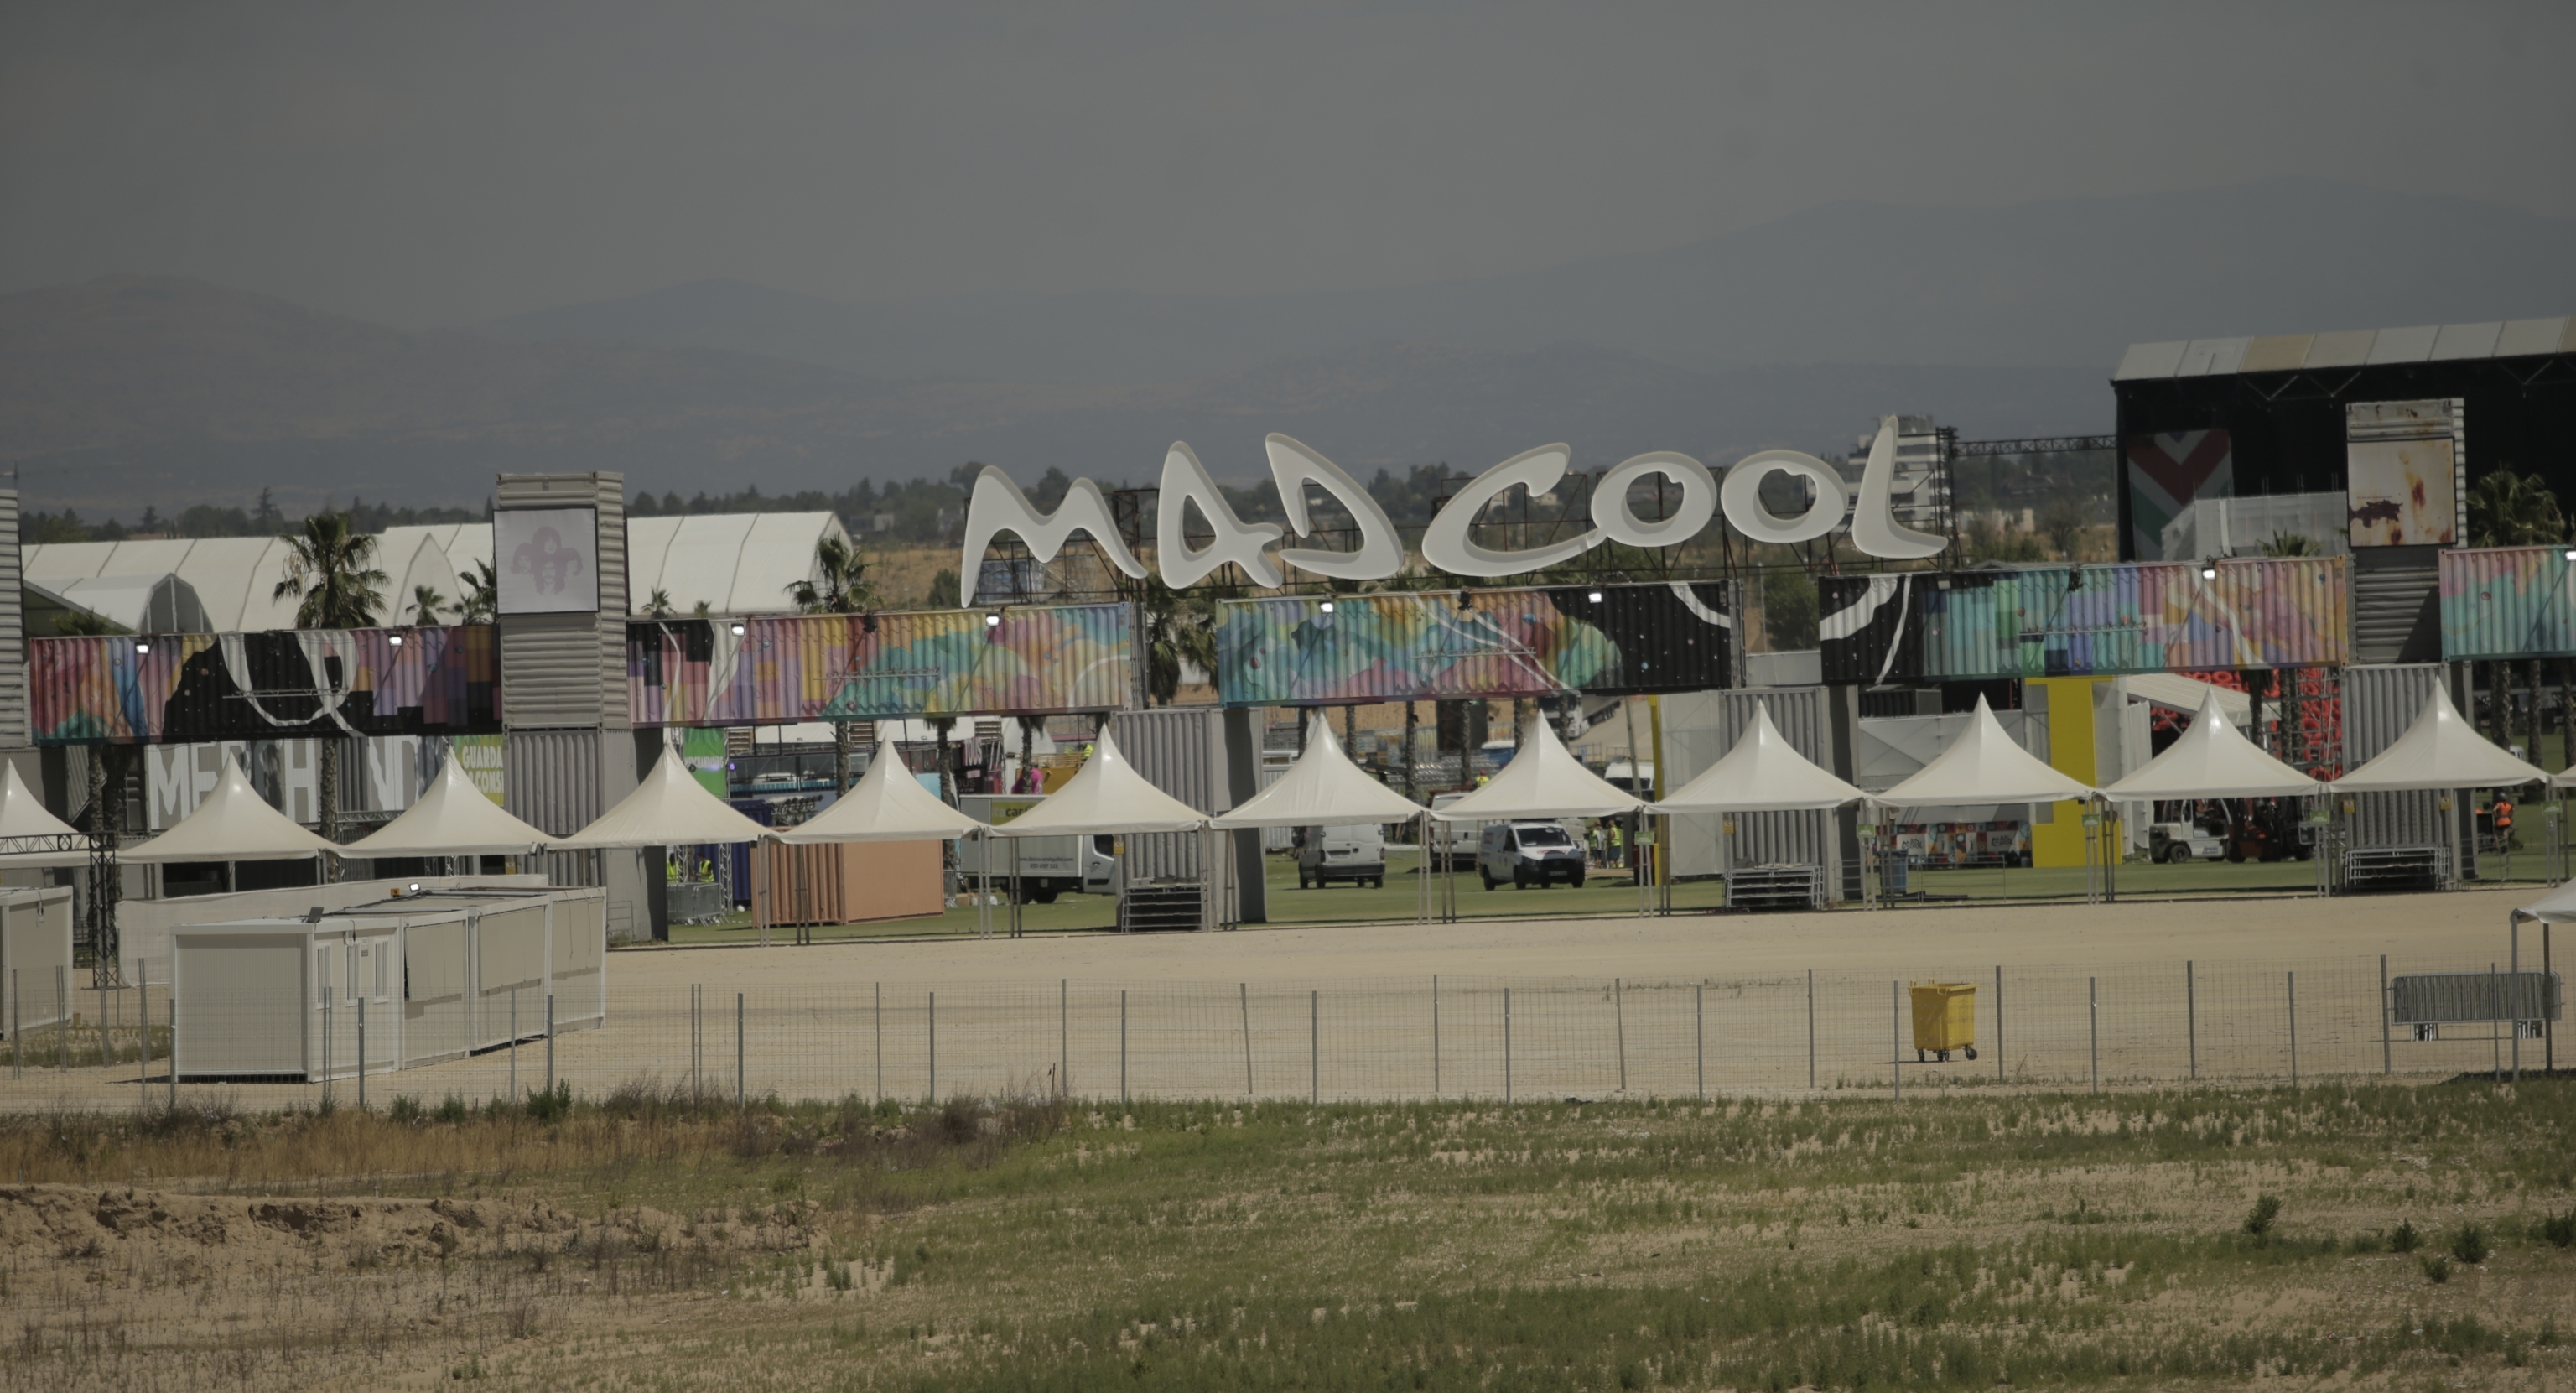 La entrada al festival Mad Cool